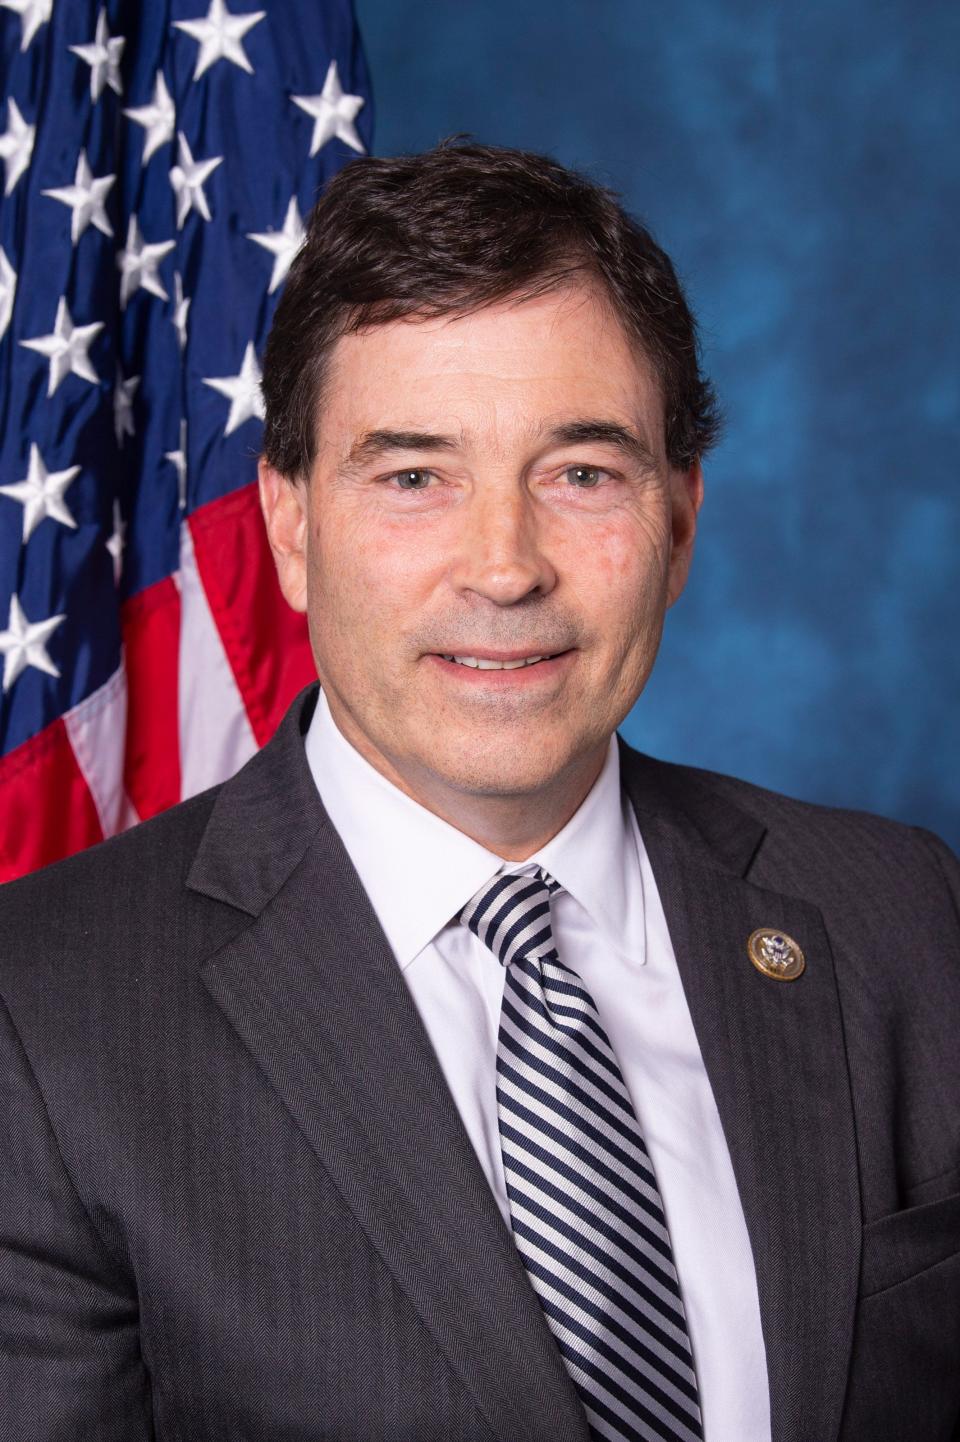 Rep. Troy Balderson, 12th Congressional District of Ohio